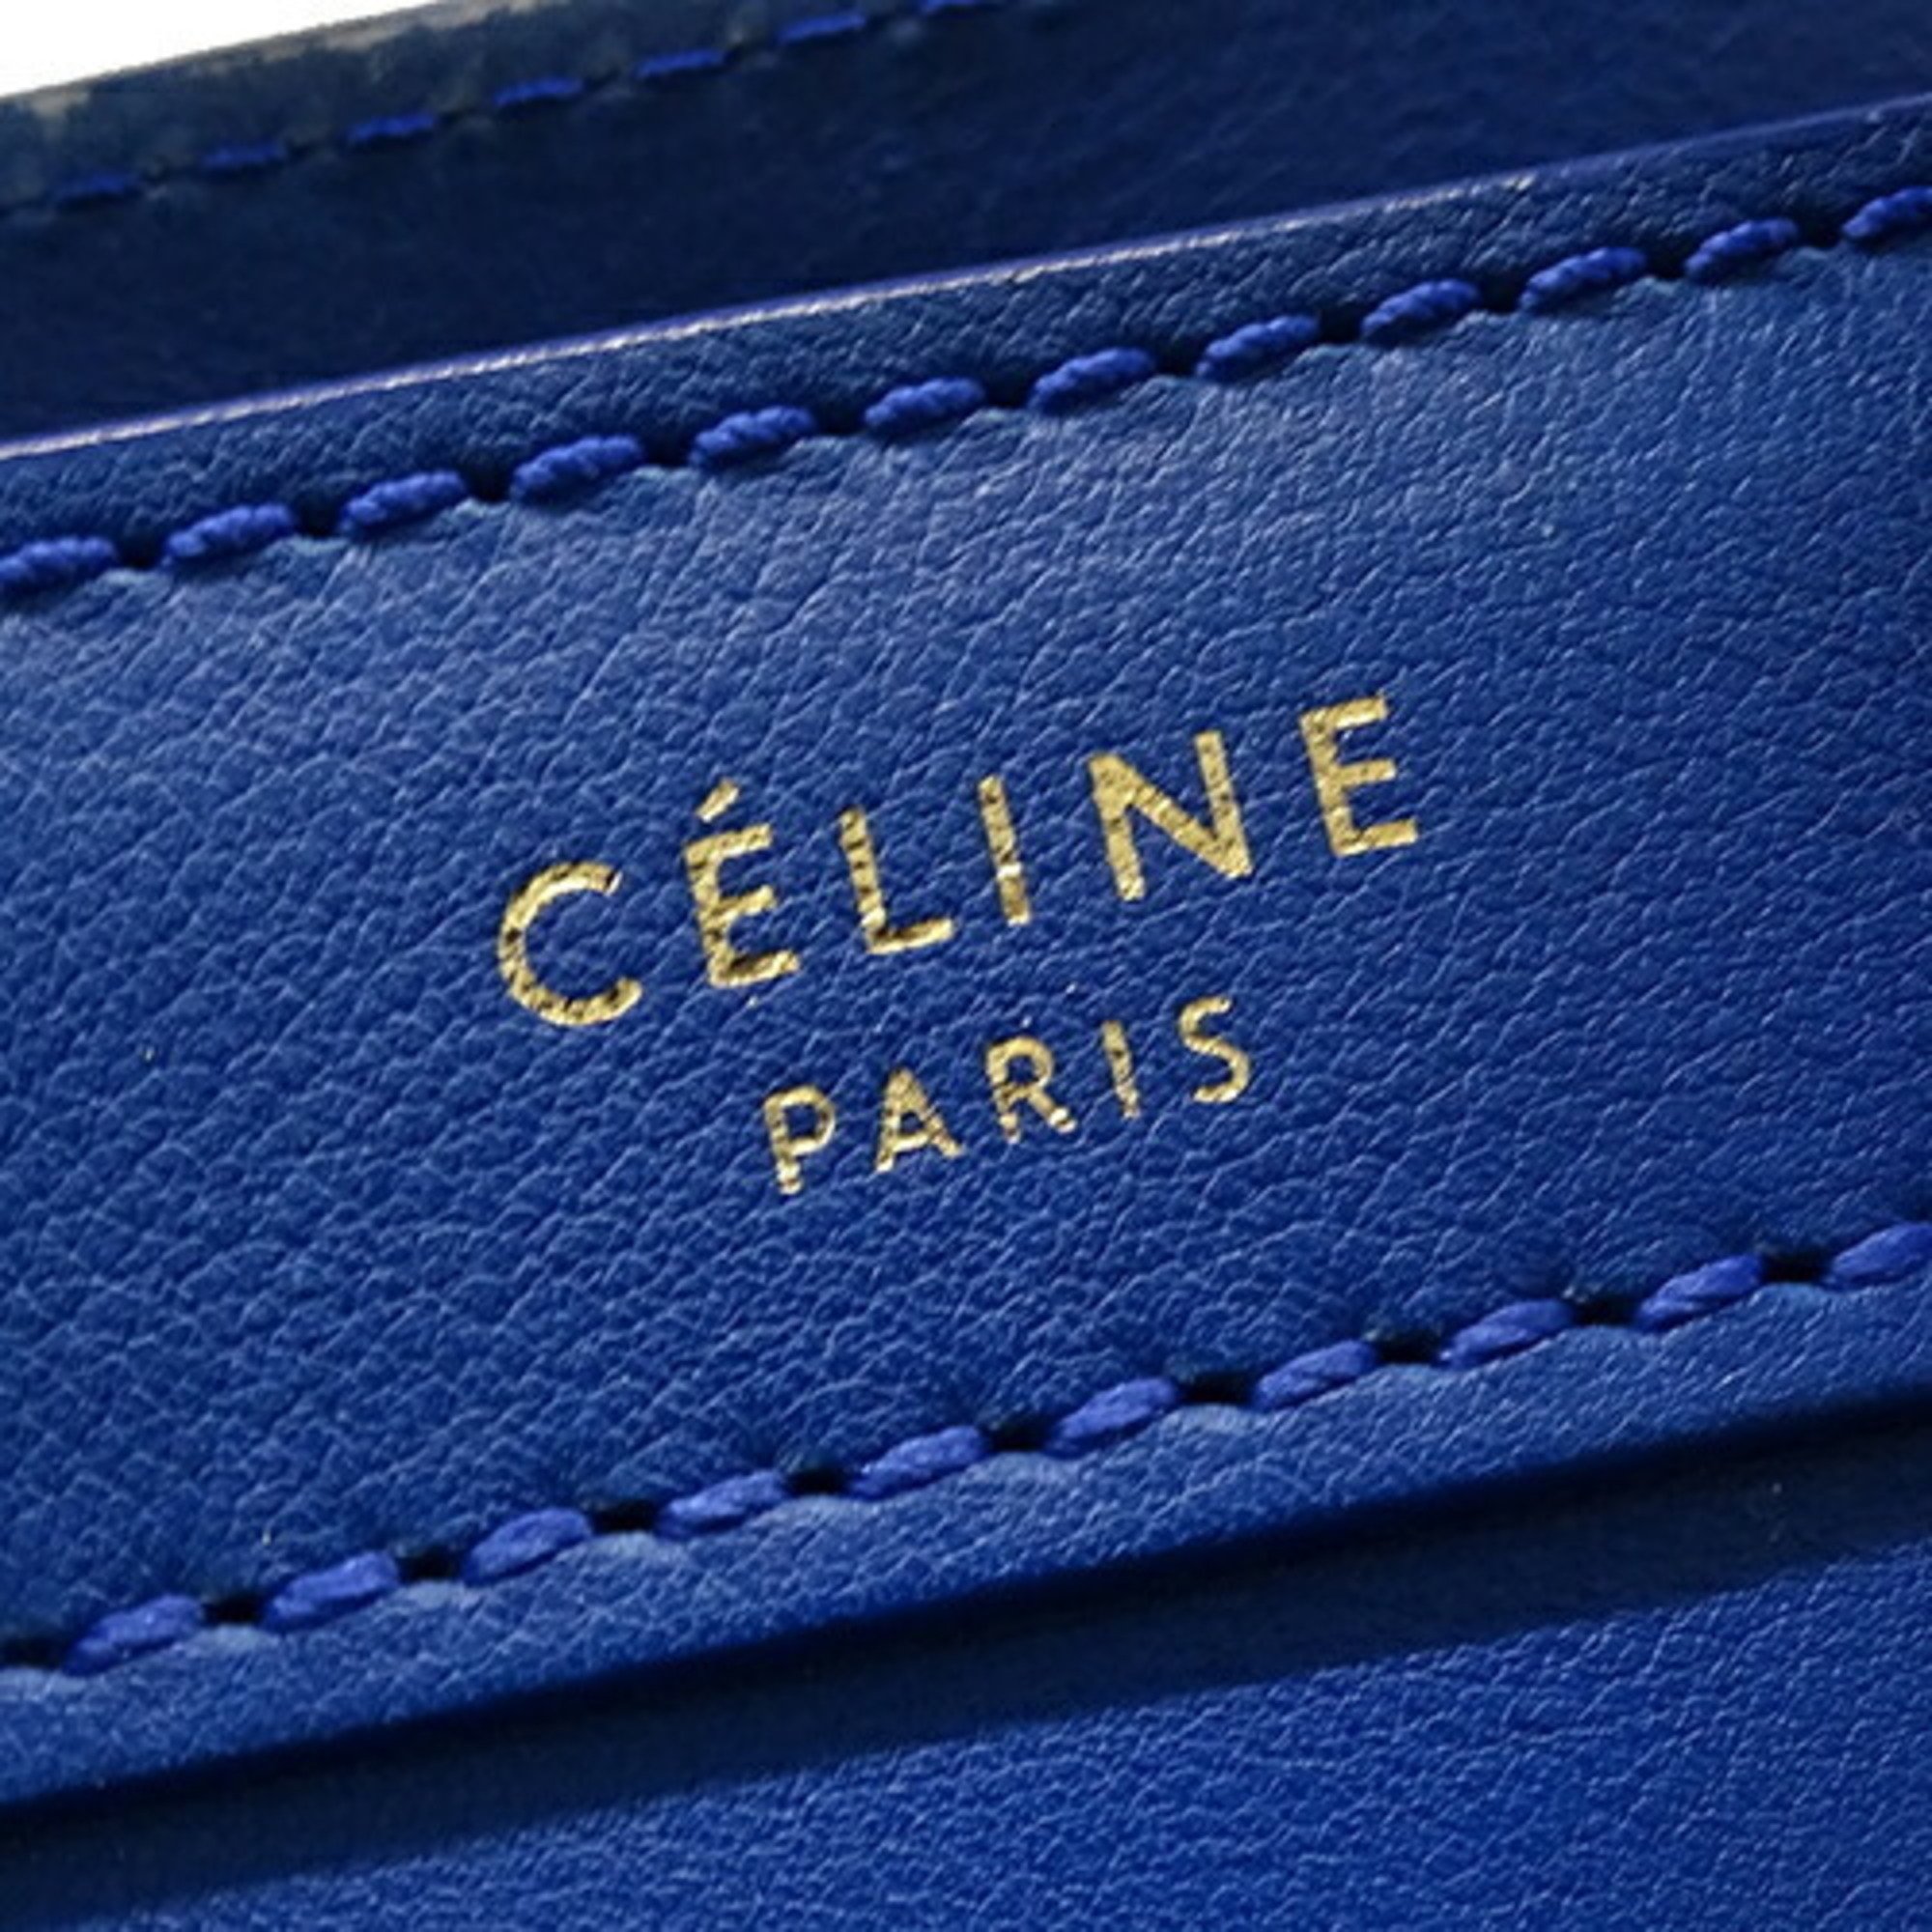 CELINE Bags for Women Handbags Shoulder 2way Leather Luggage Nano Shopper Blue